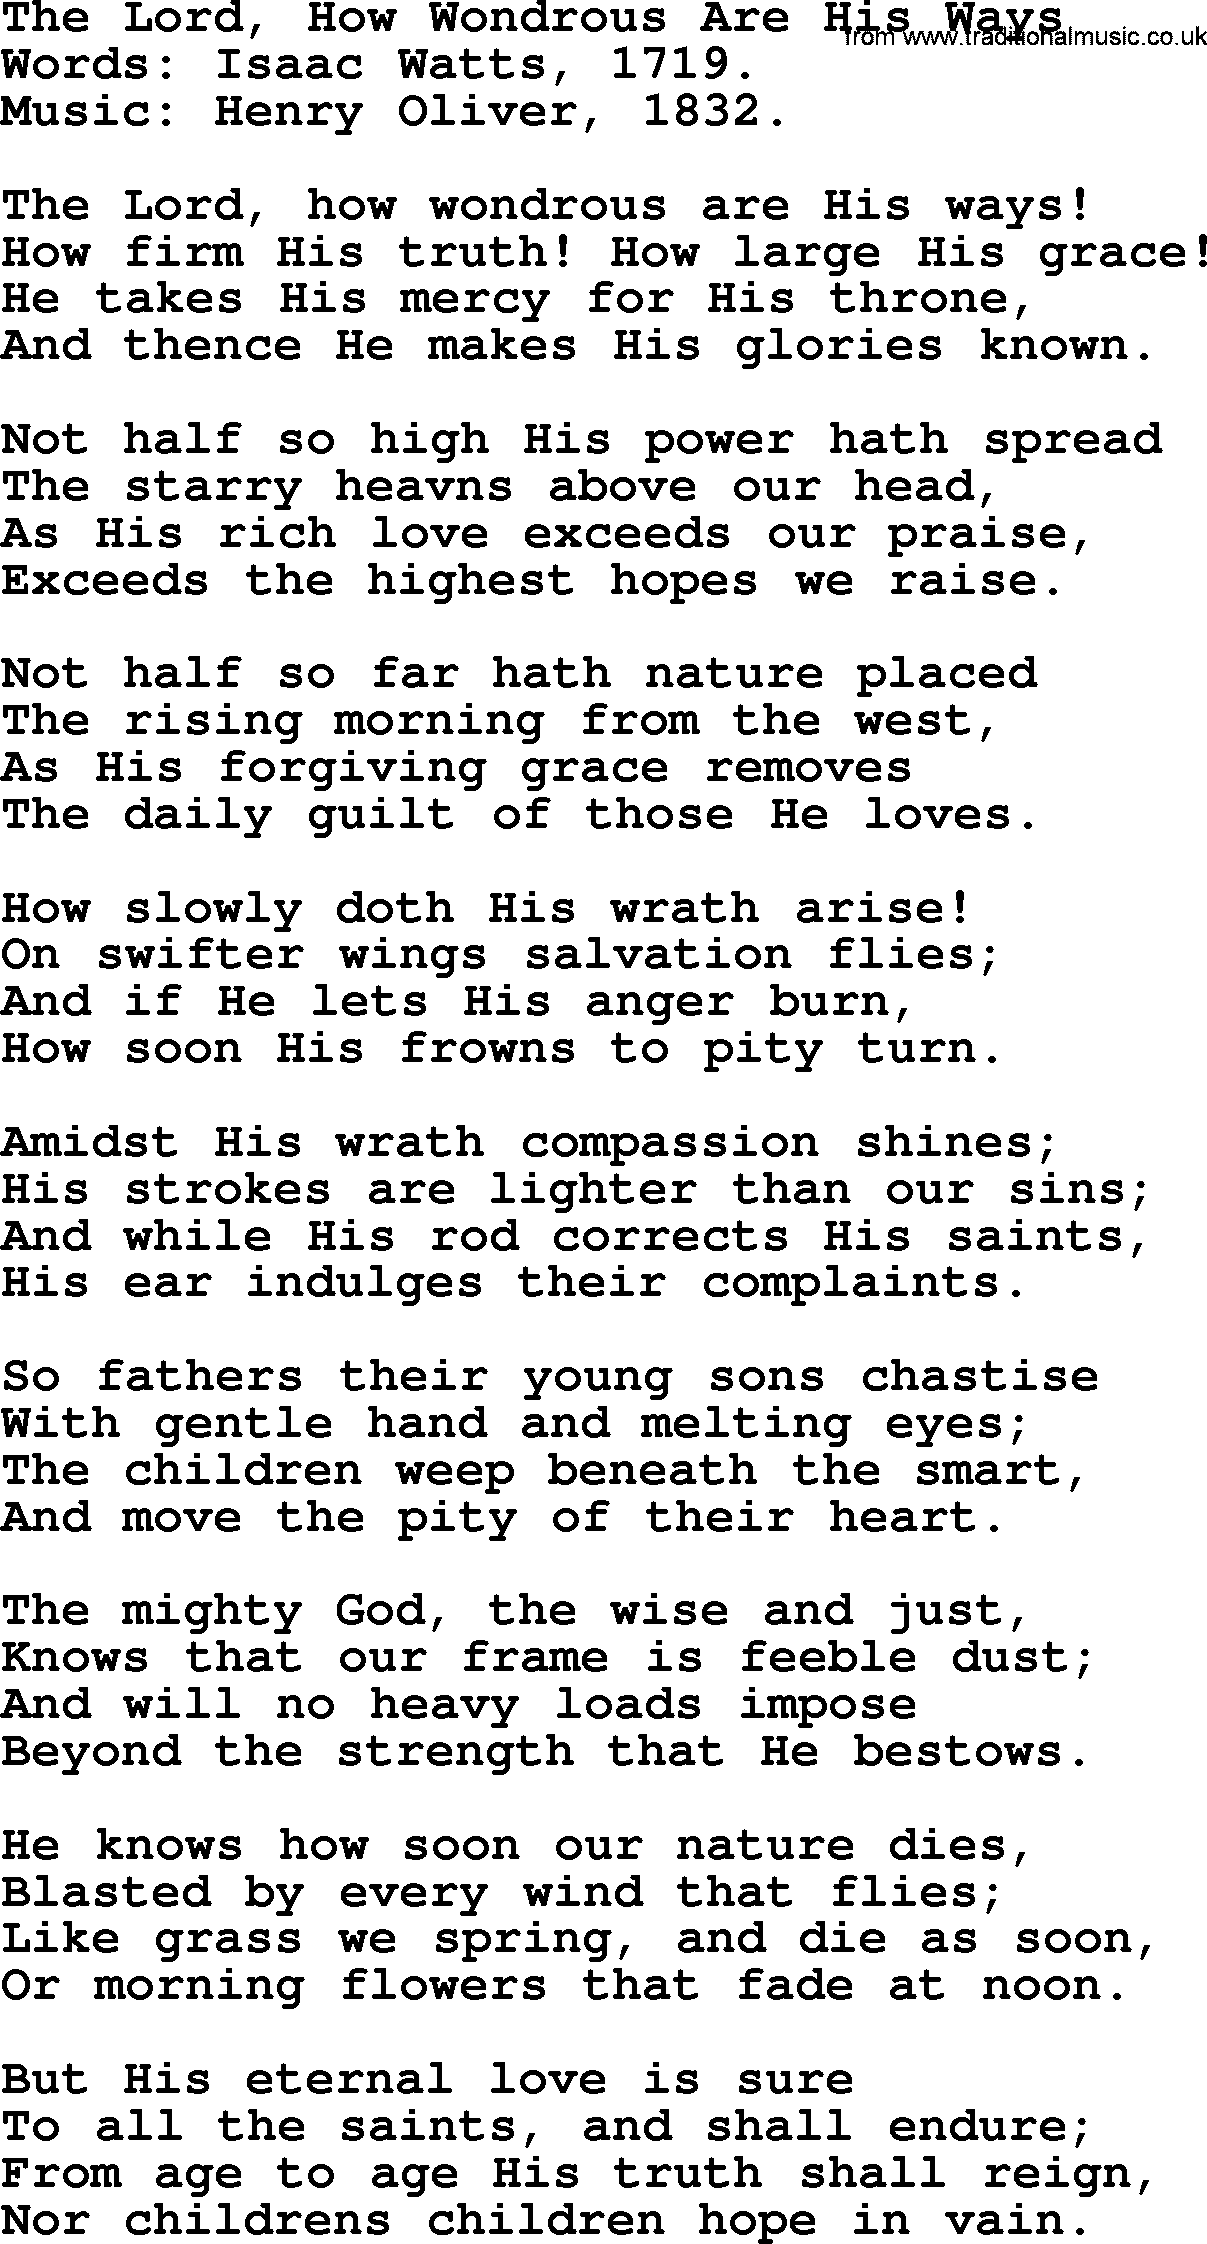 Isaac Watts Christian hymn: The Lord, How Wondrous Are His Ways- lyricss